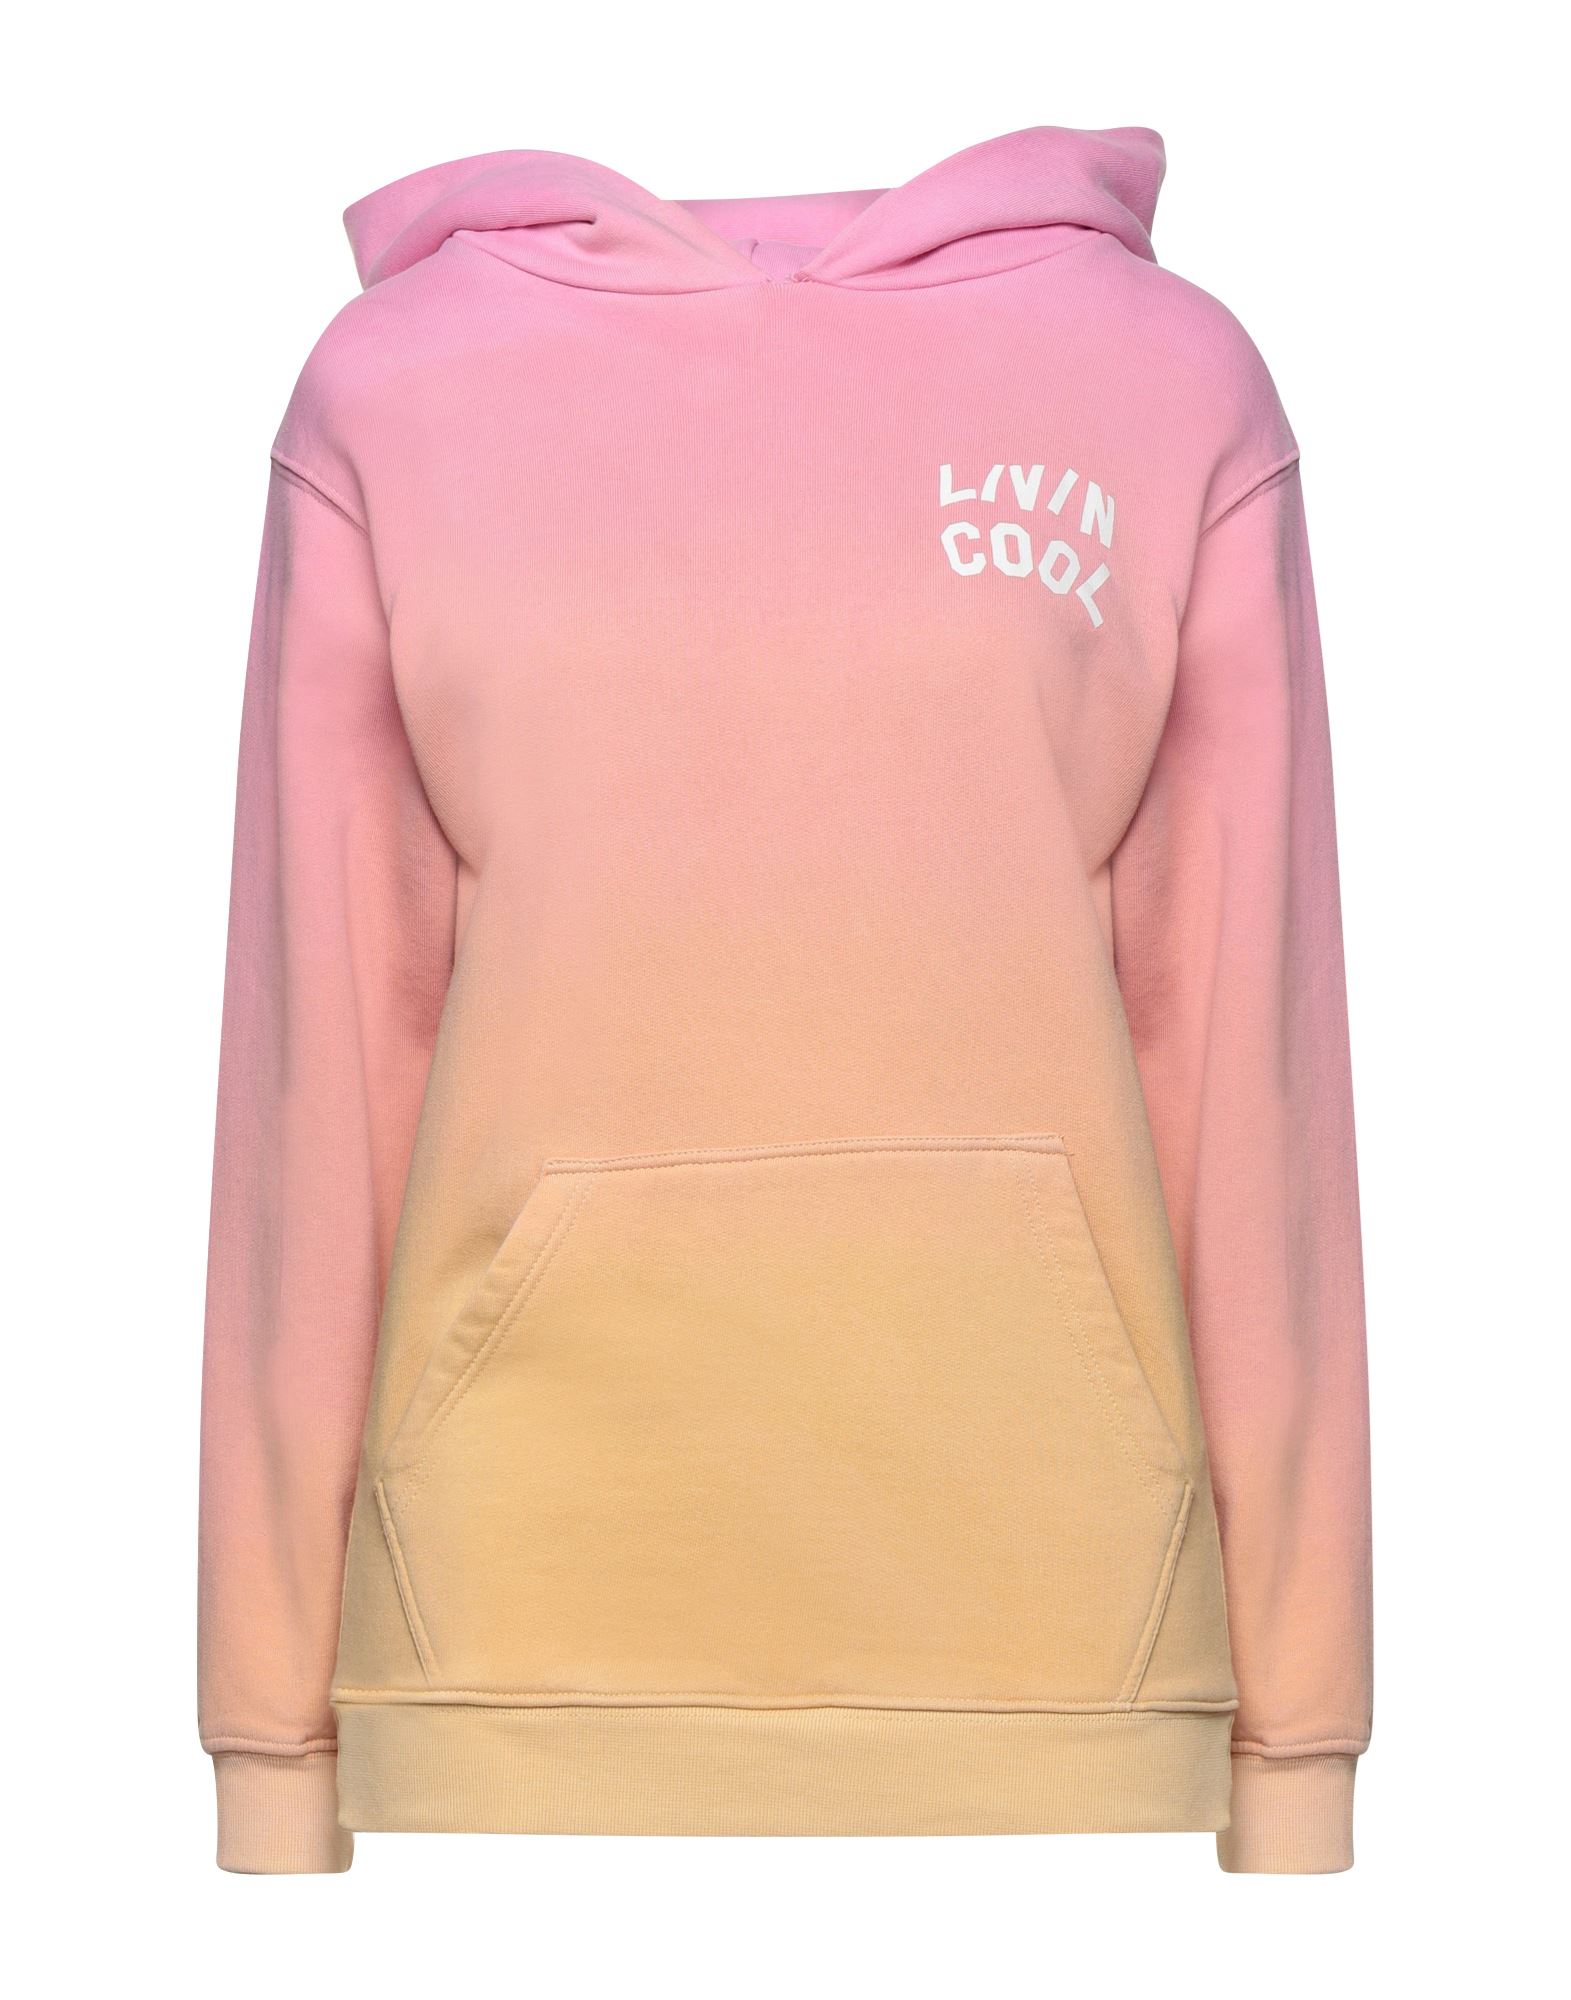 Livincool Woman Sweatshirt Pink Size L Cotton